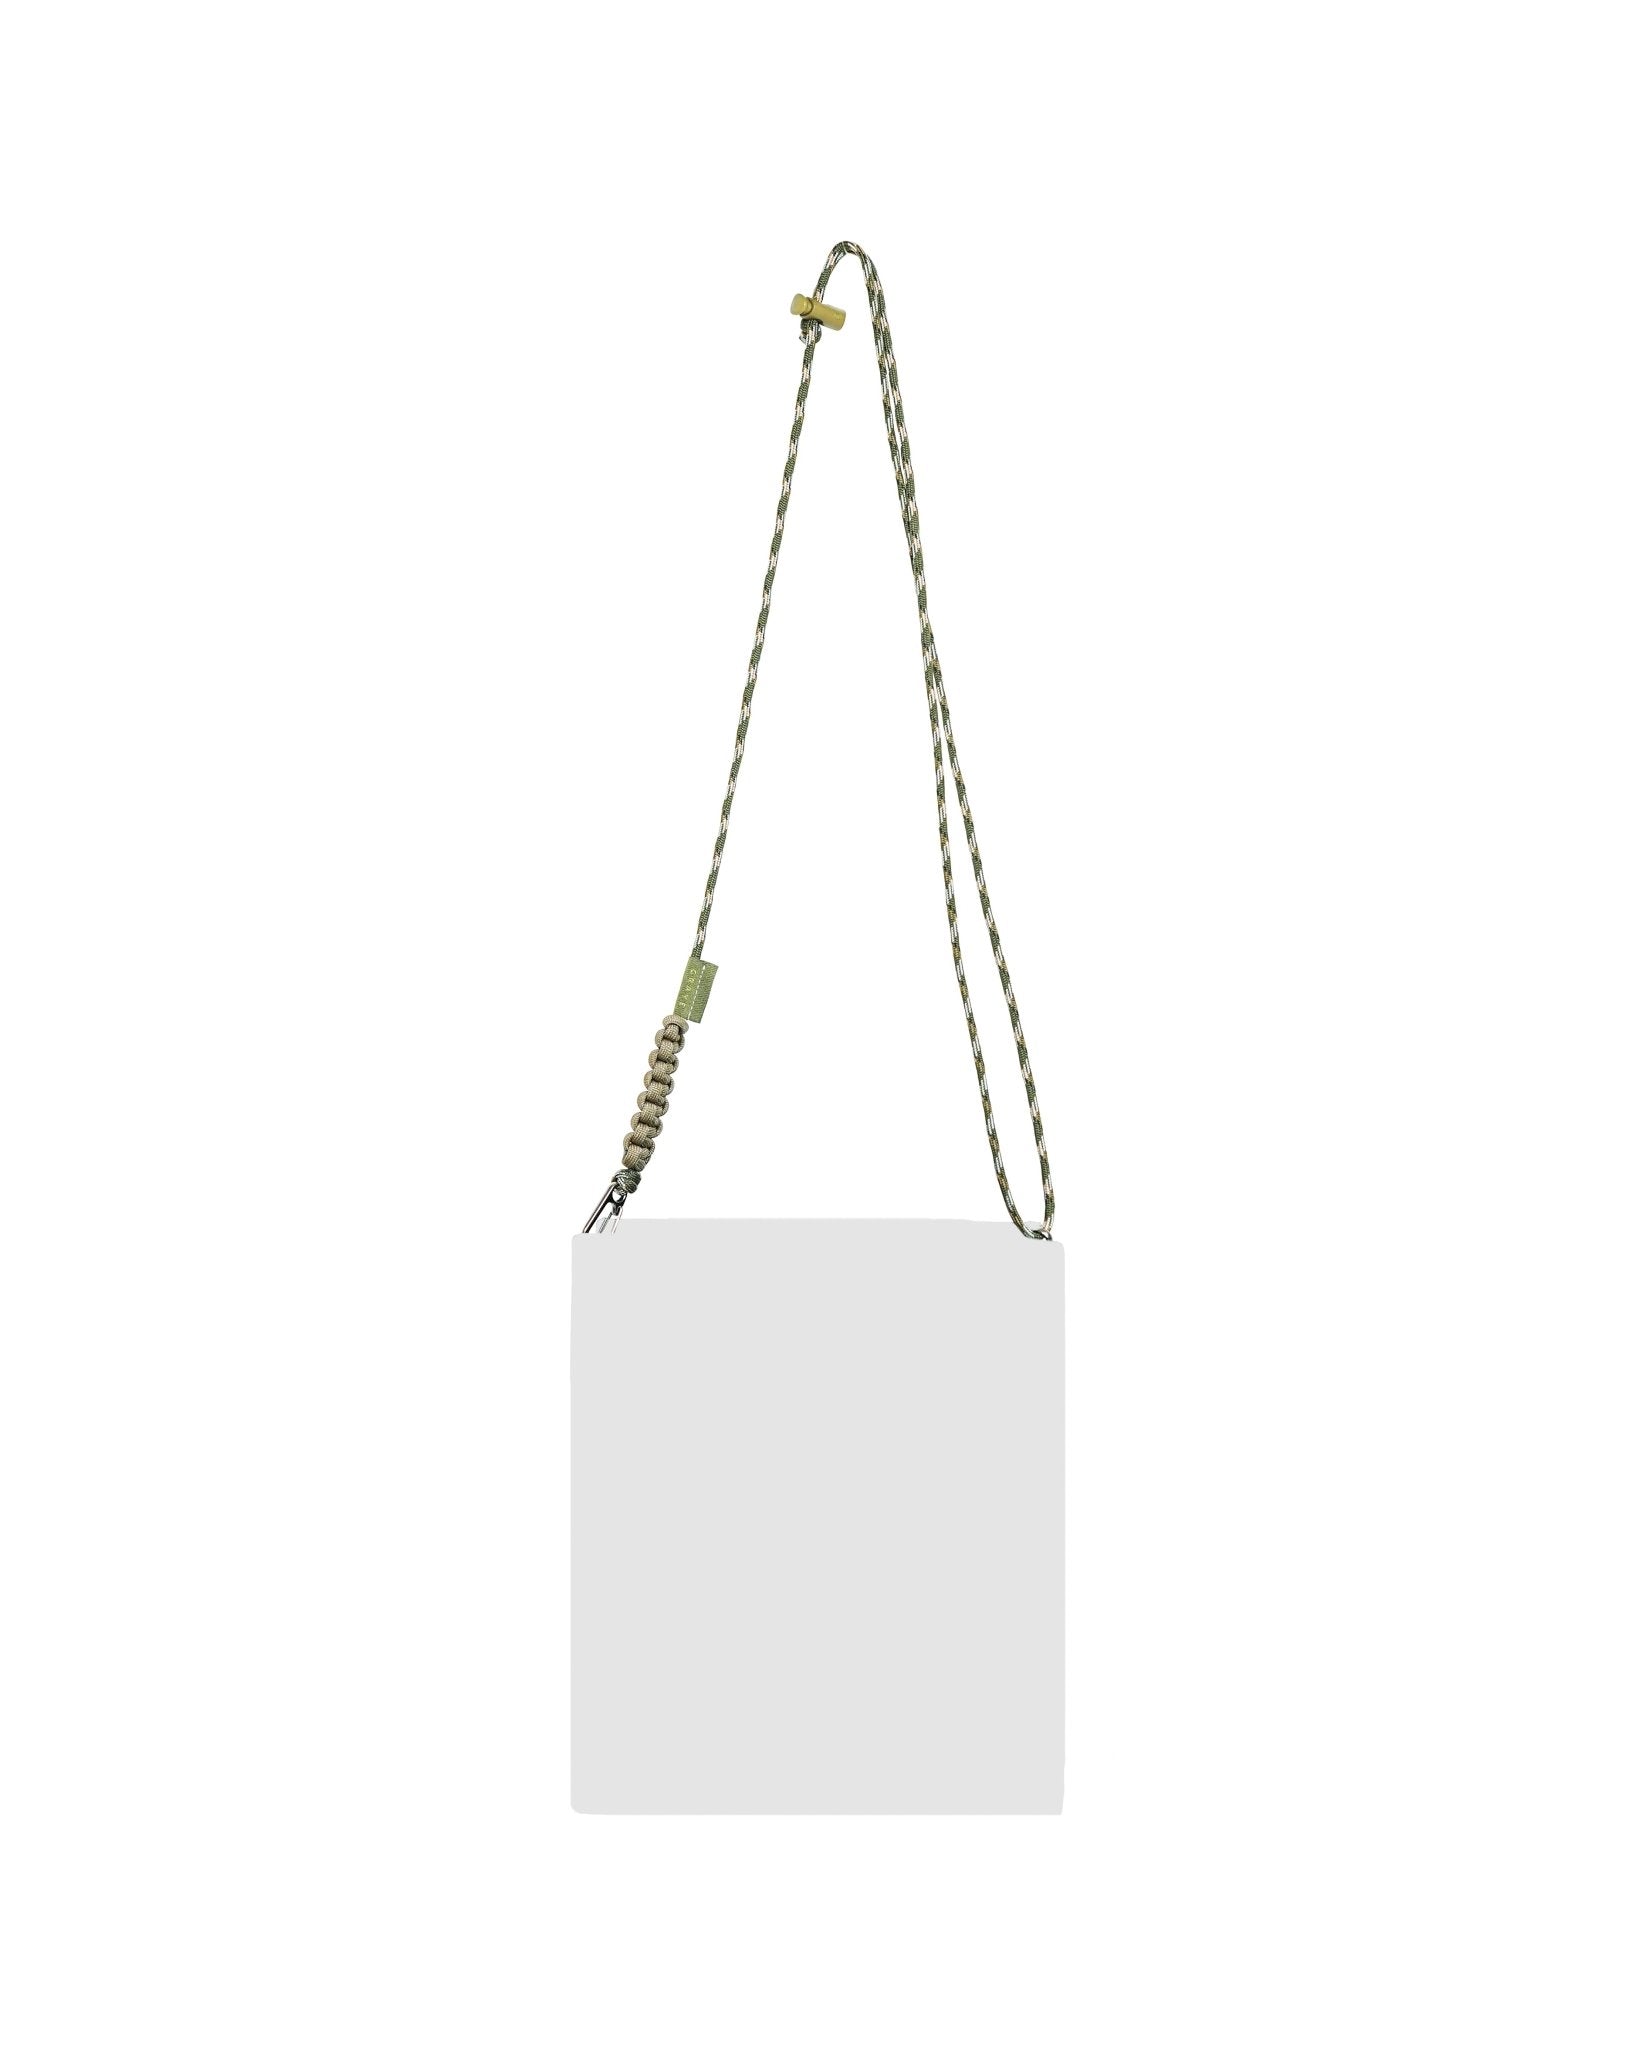 GRAYE Singapore Bag Strap - Roki Multi-Purpose Cord